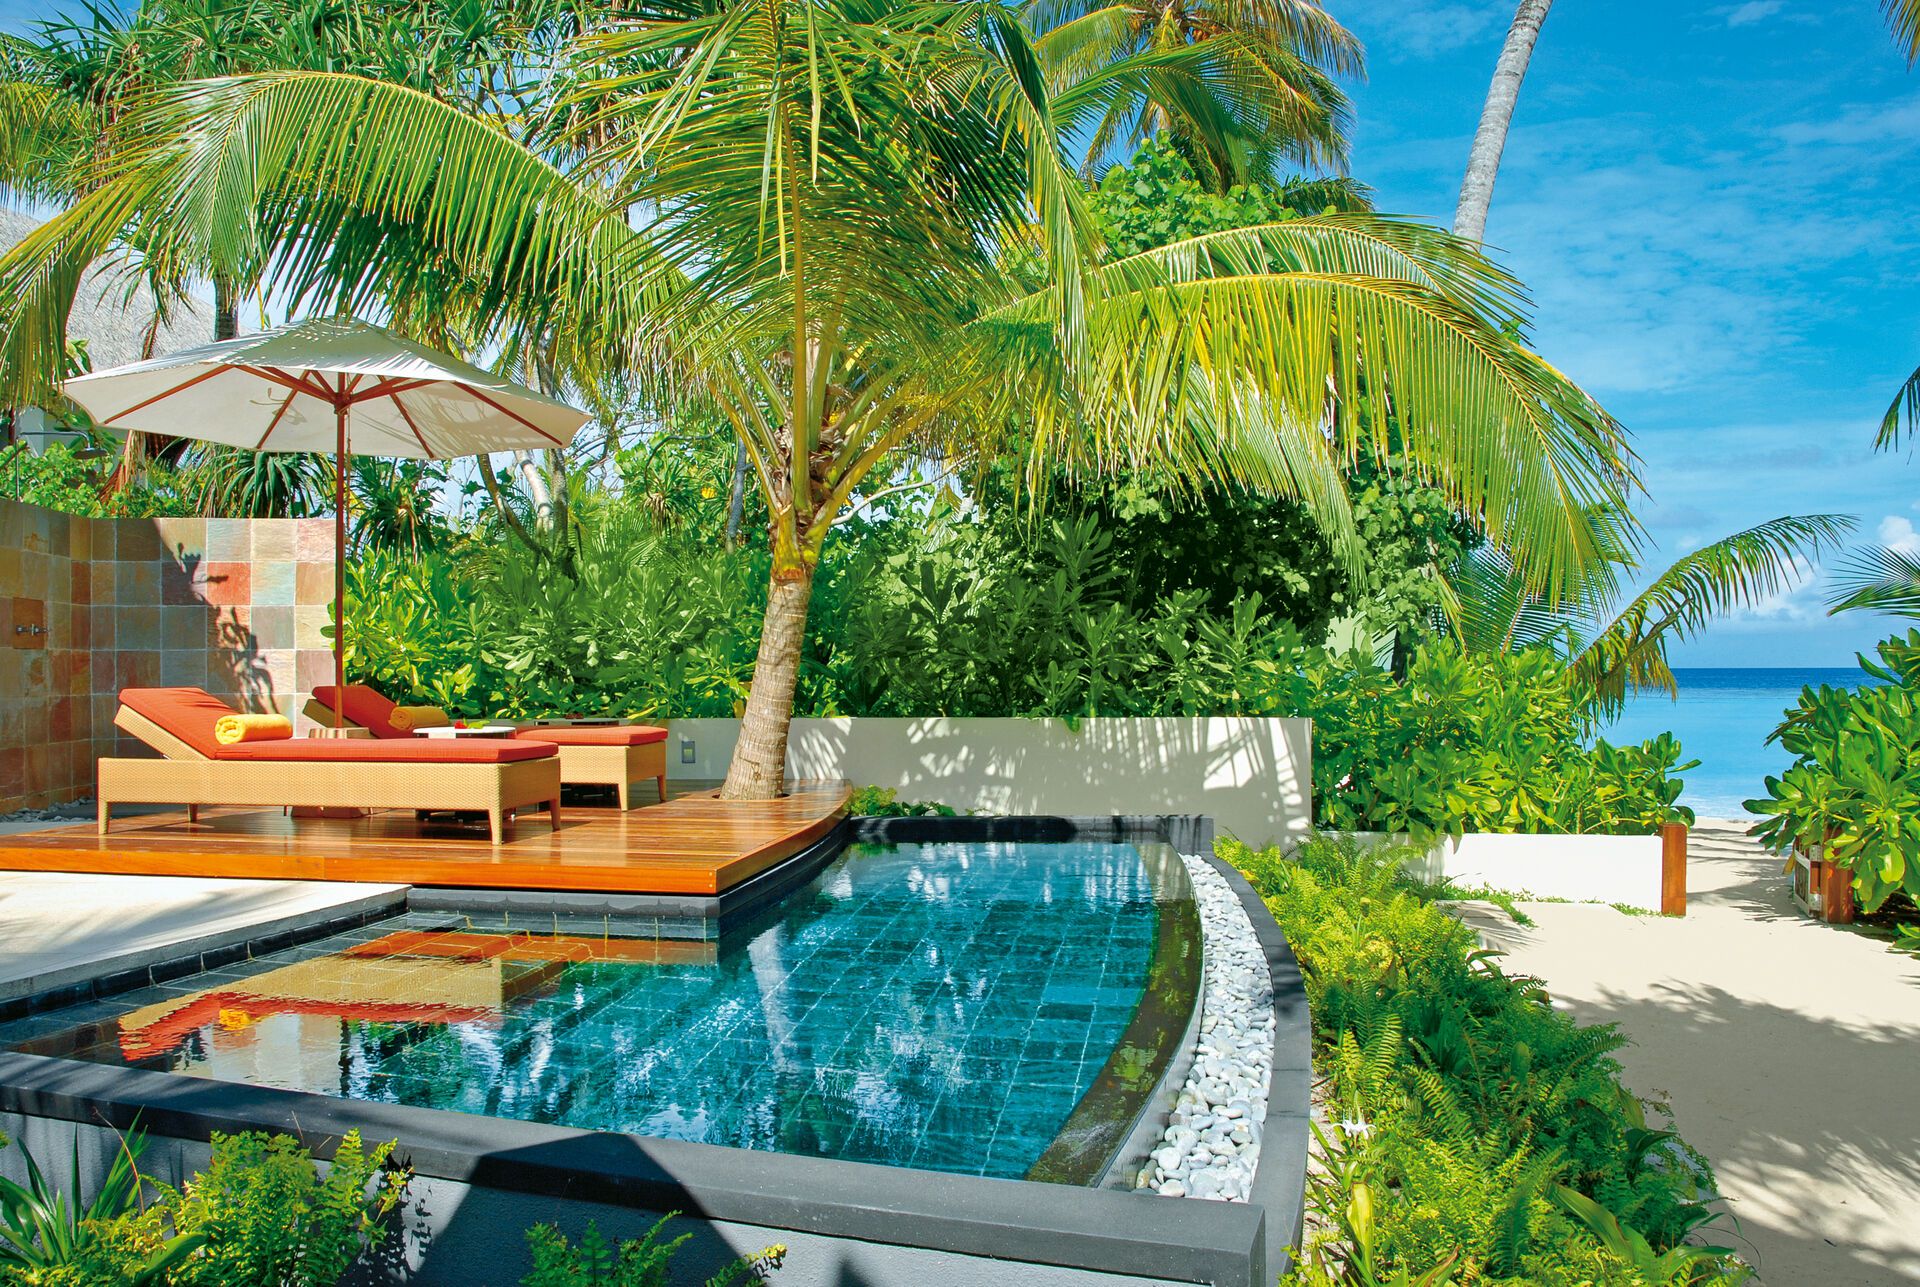 Maldives - Hotel Constance Halaveli Maldives 6* - transfert inclus